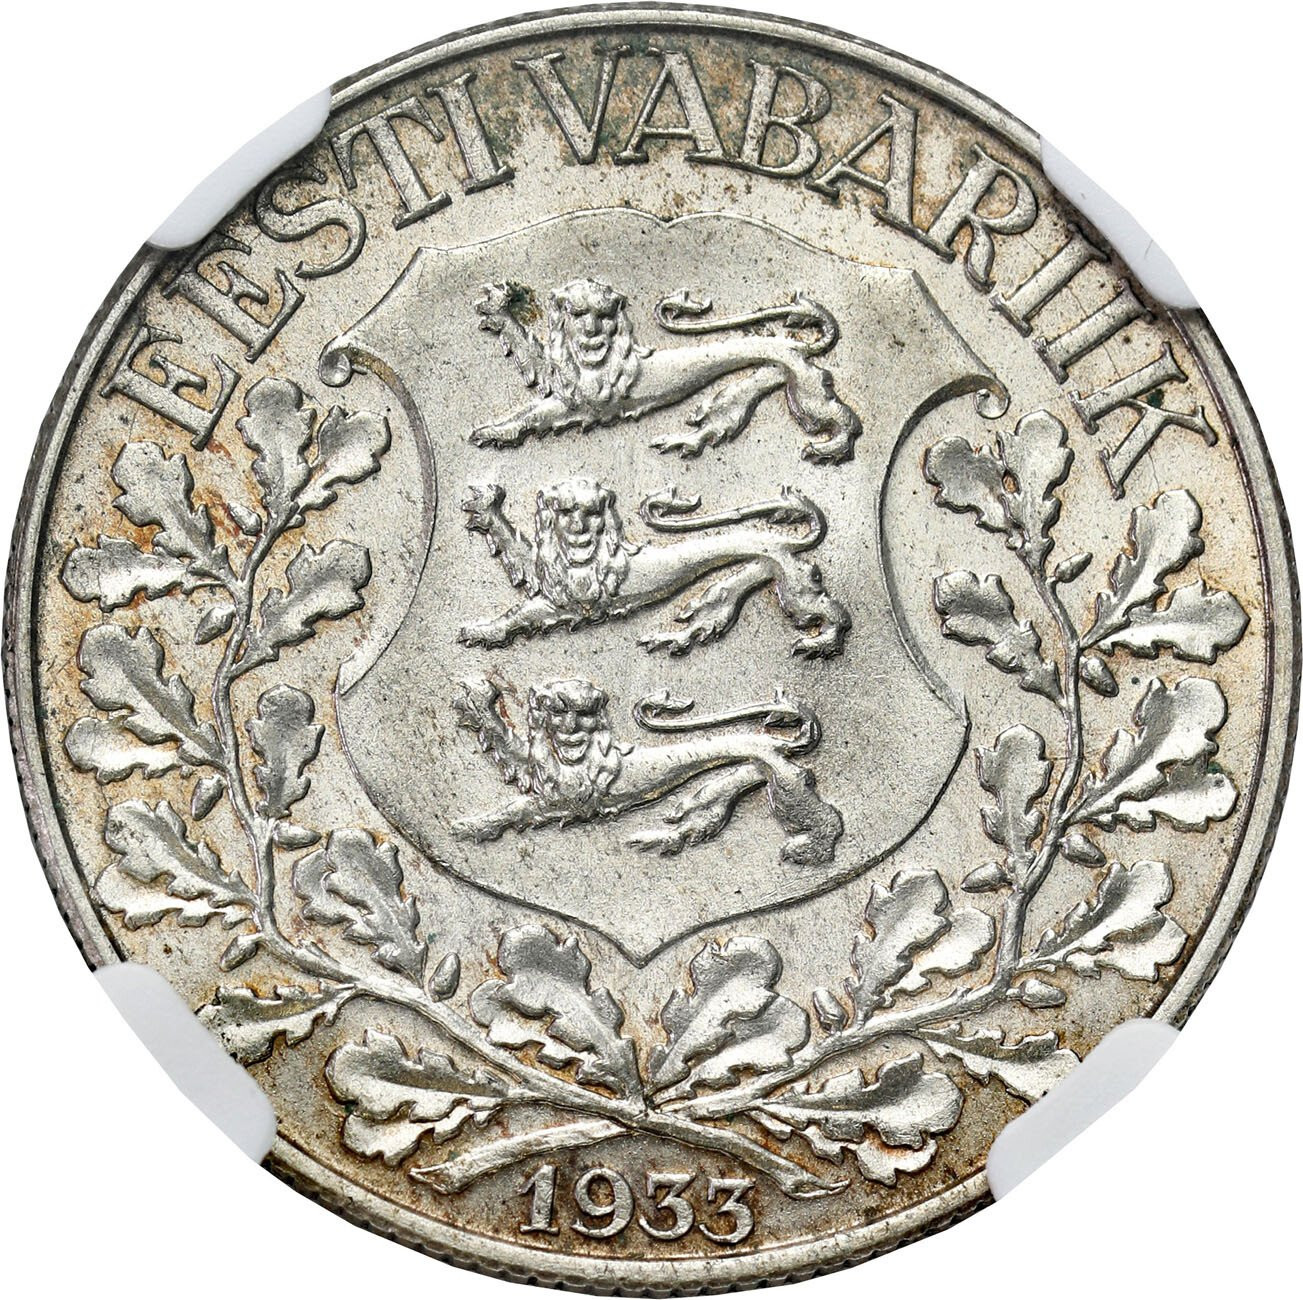 Estonia. 1 korona 1933, Tallinn NGC MS64 - PIĘKNE